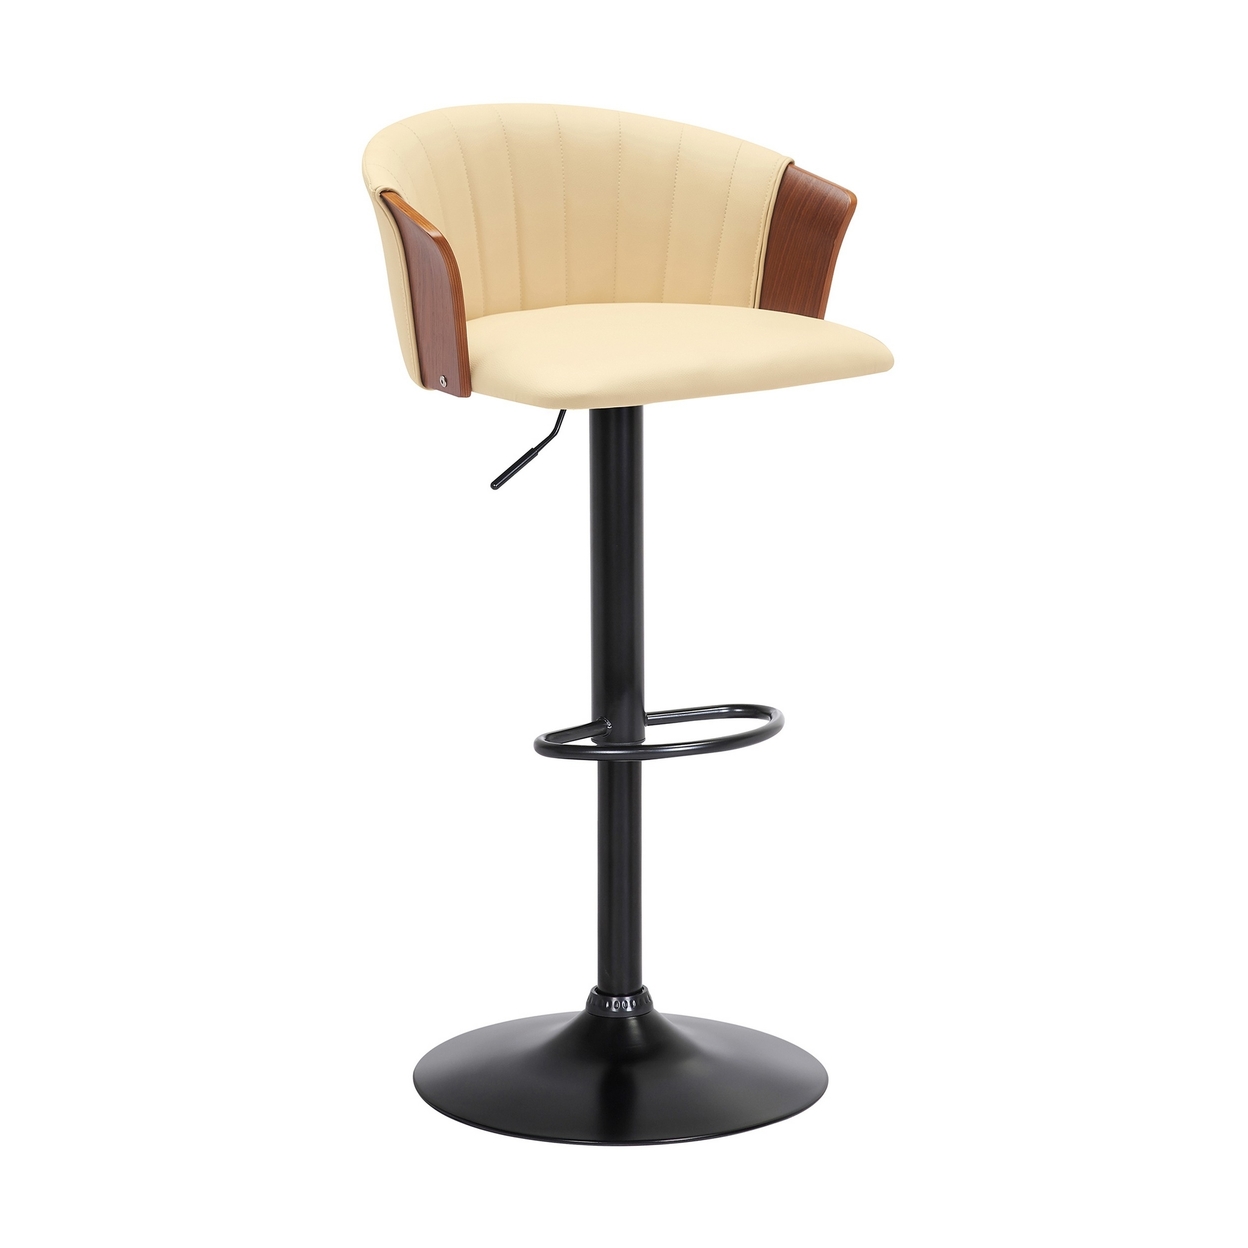 Liz 24-33 Inch Adjustable Height Swivel Barstool Chair, Cream Faux Leather - Saltoro Sherpi